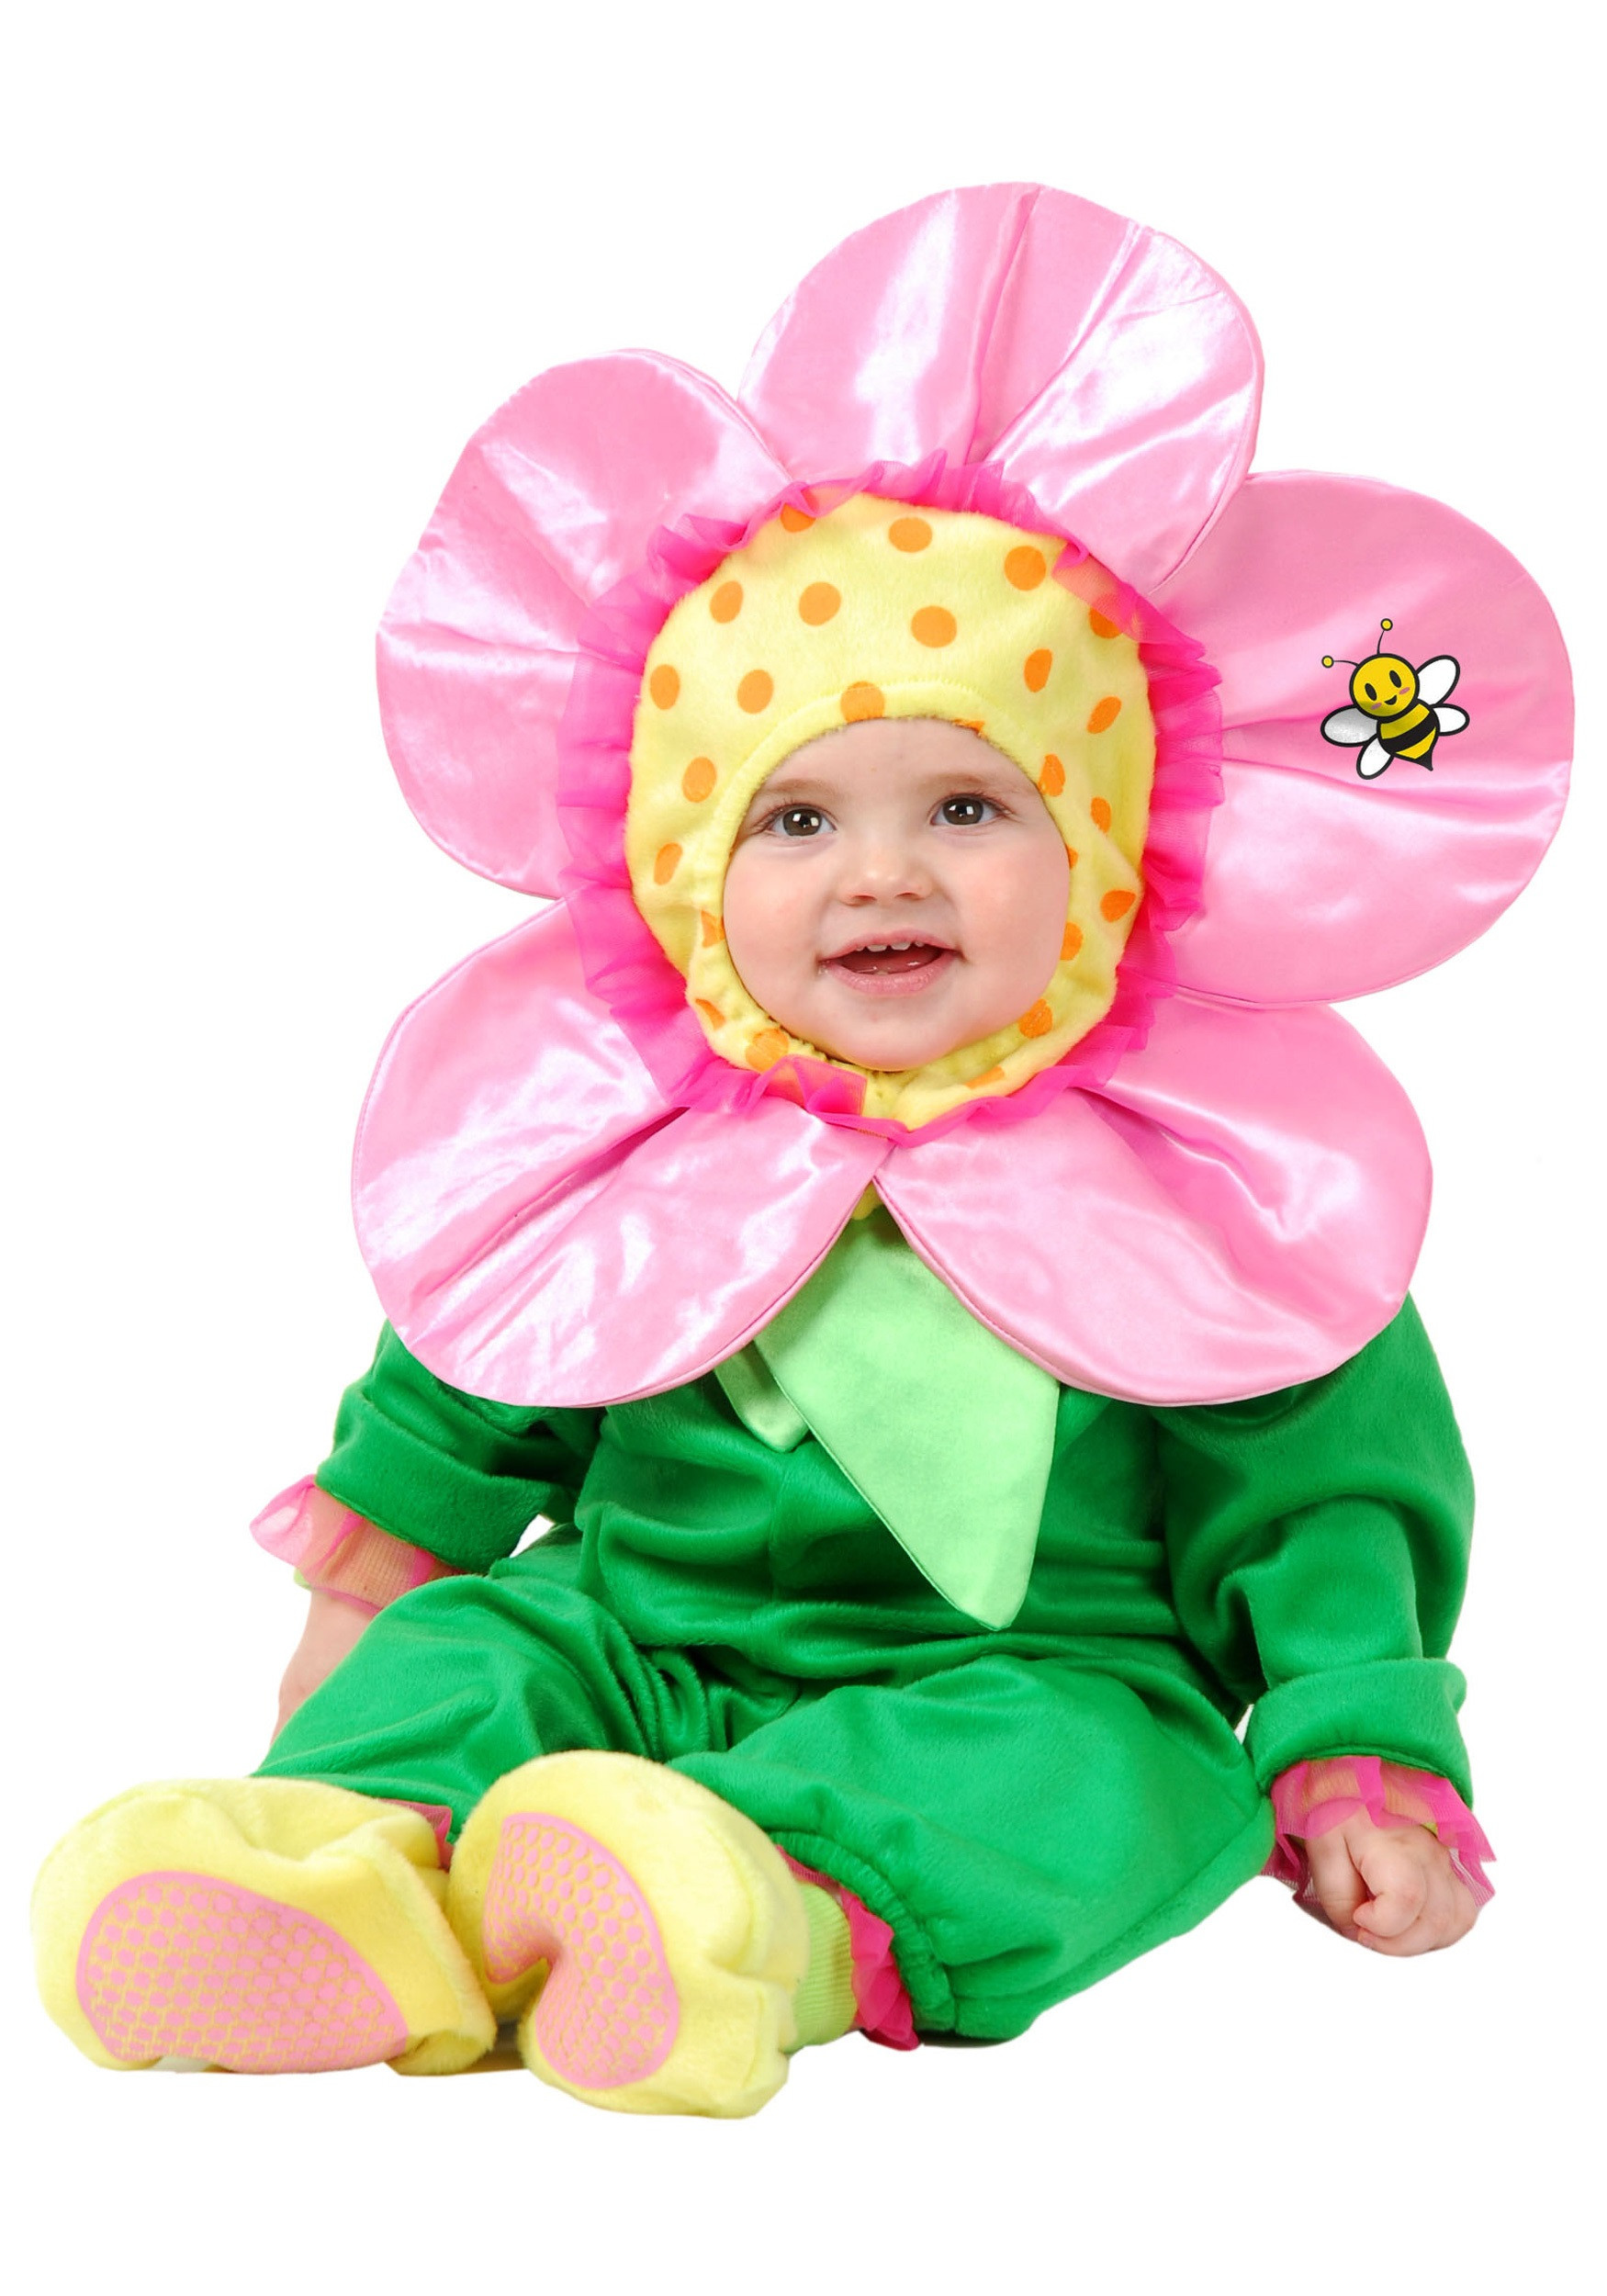 Flower Halloween Costume For Toddler
 Little Flower Baby Costume Infant and Toddler Easter